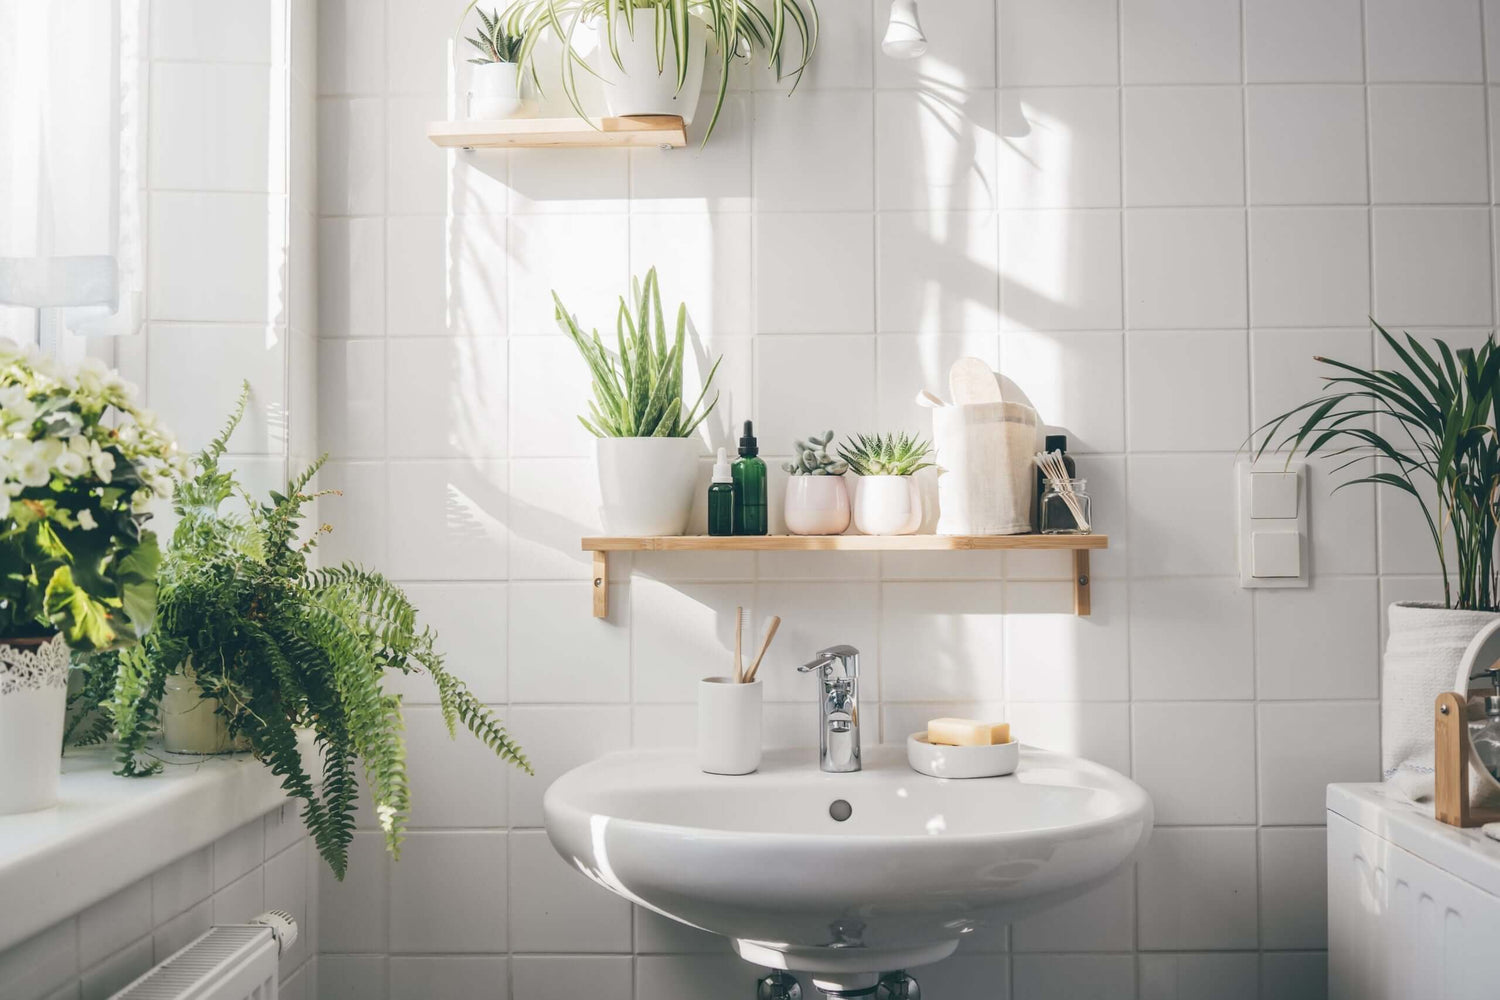 Bathroom Windowsill Ideas: Six Stylish Options For Your Home